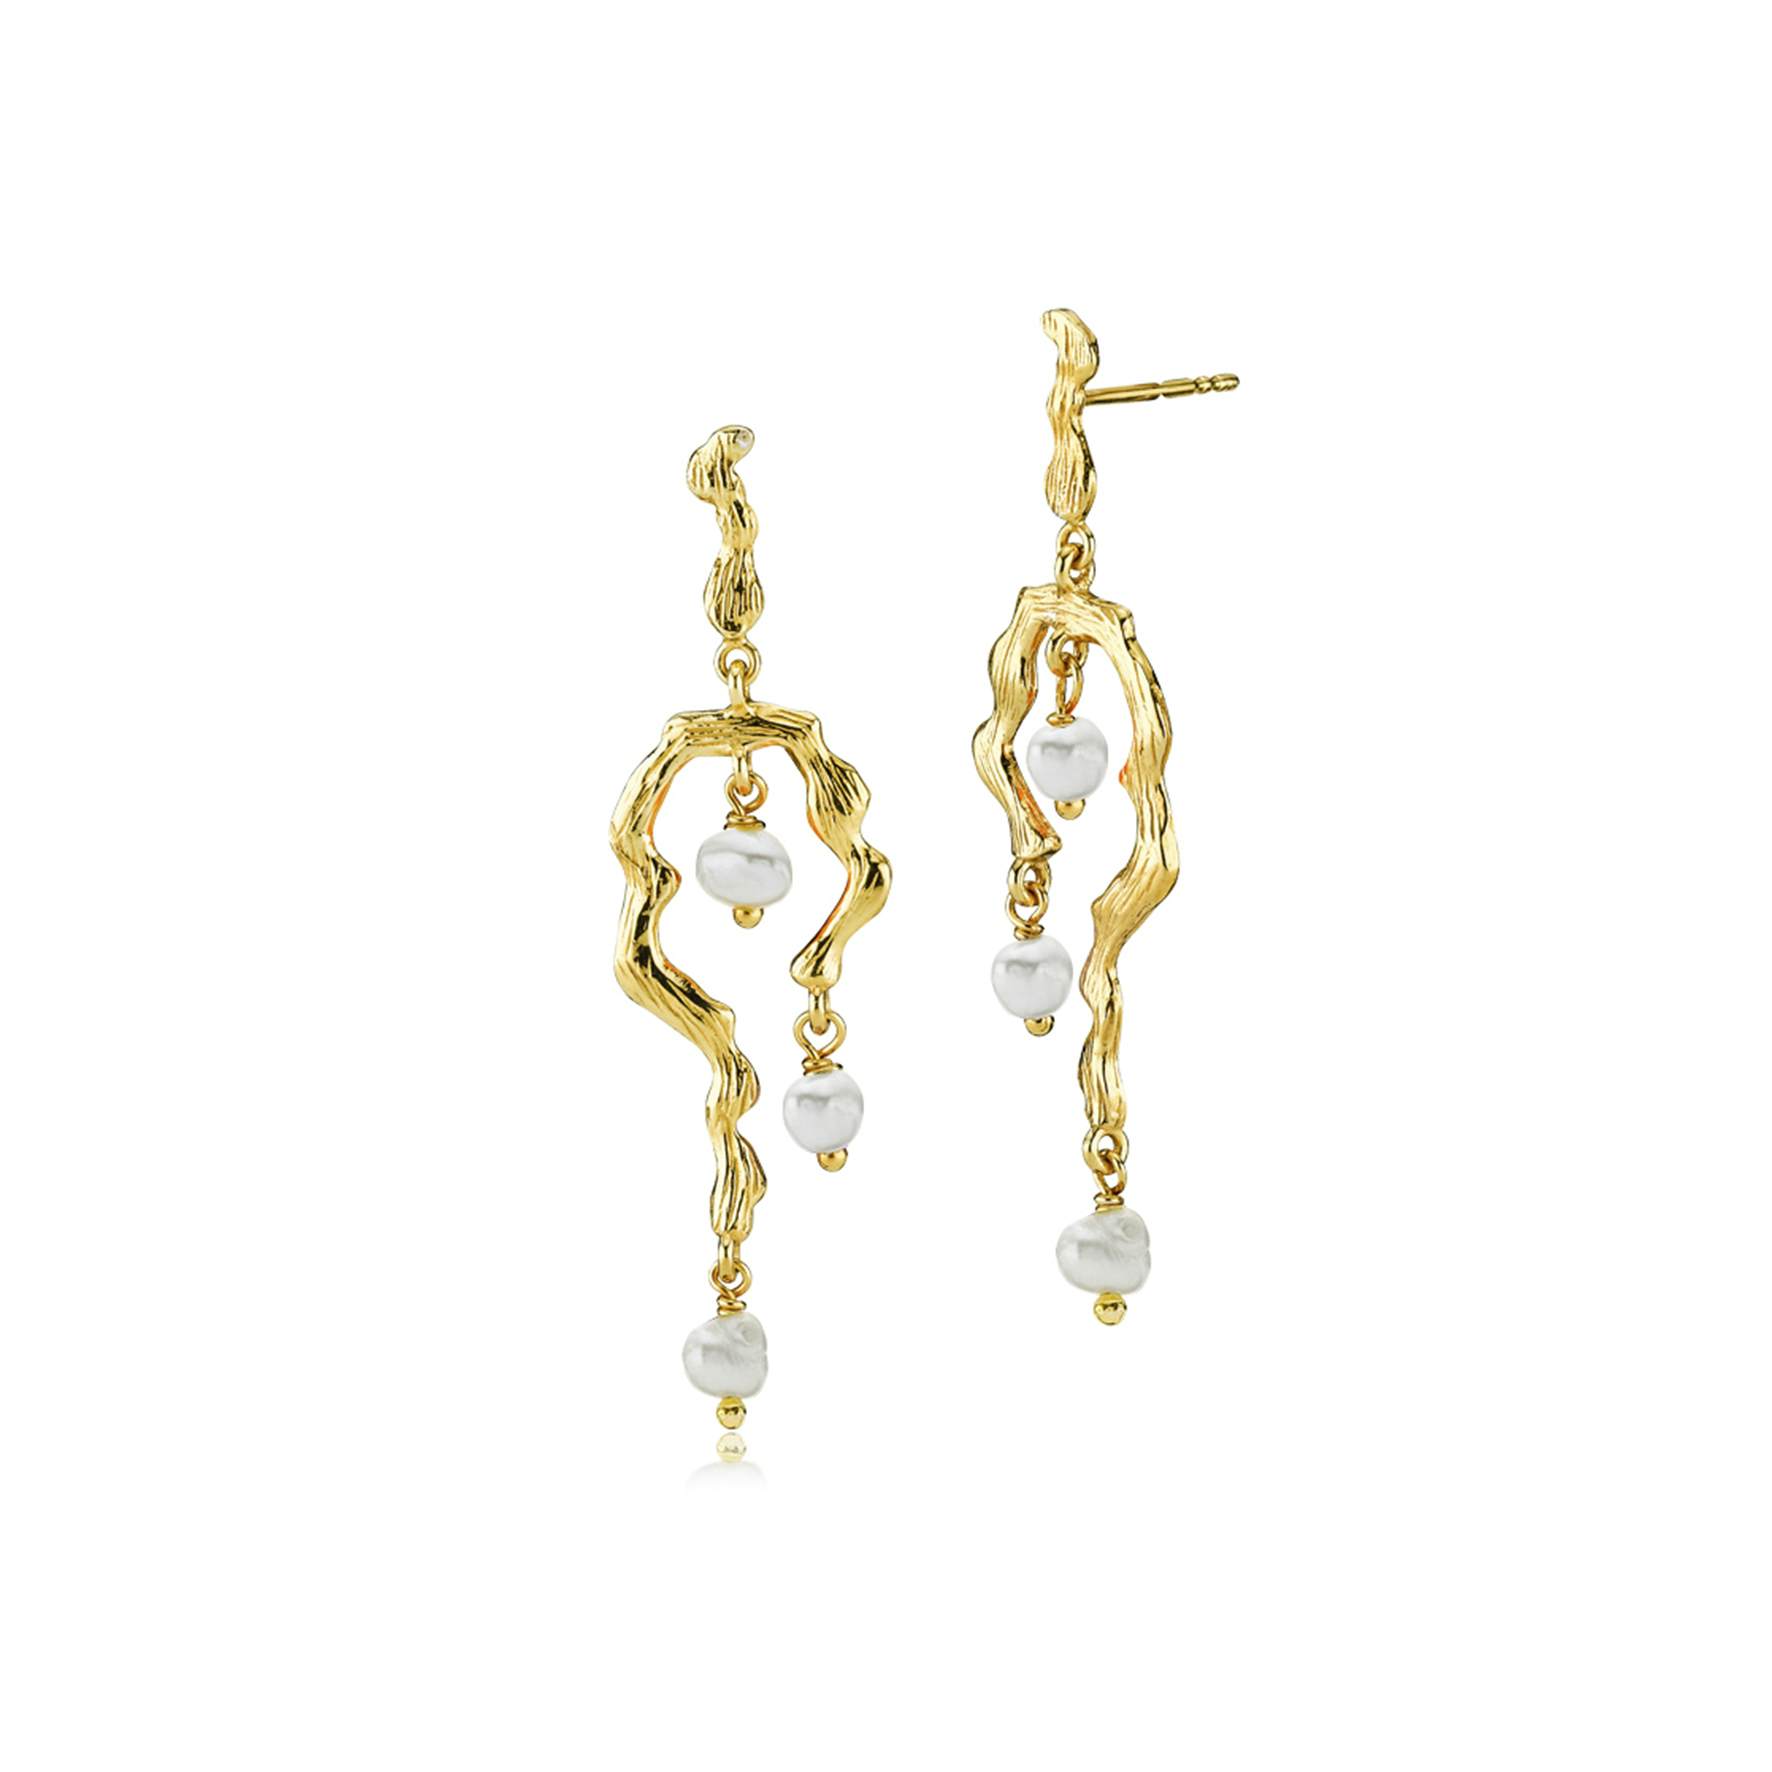 Lærke Bentsen By Sistie Long Earrings With Pearls fra Sistie i Forgylt-Sølv Sterling 925|Freshwater Pearl